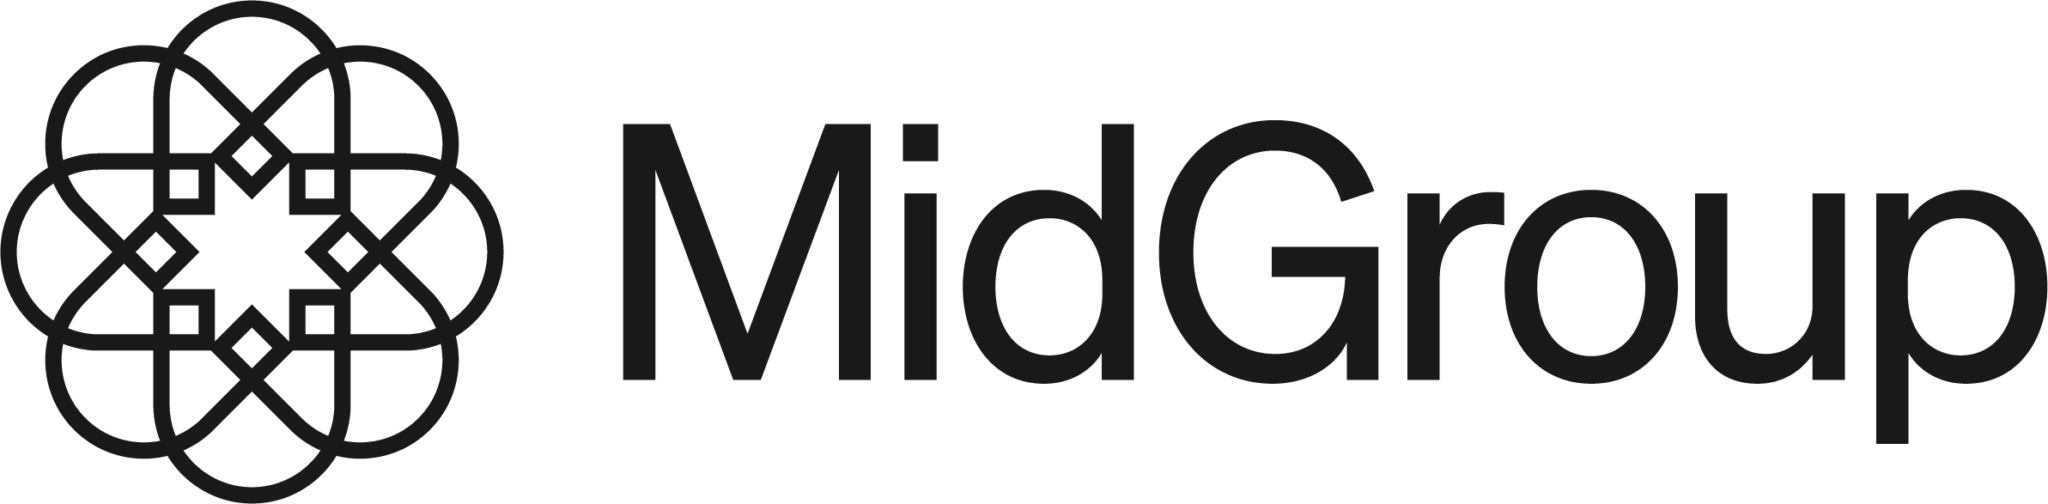 mid group logo